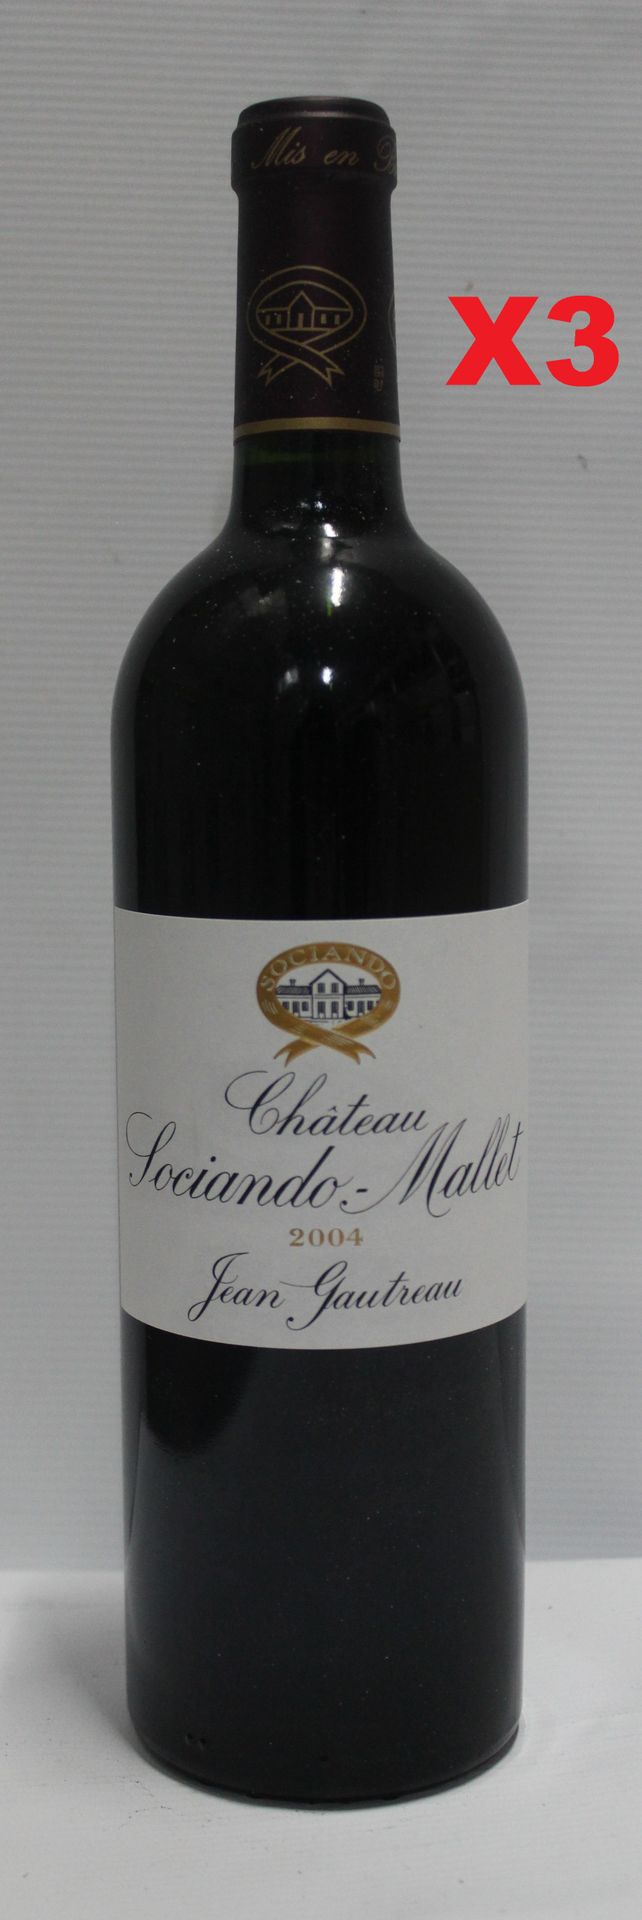 Null 3瓶75cl - Haut-Médoc - SOCIANDO MALLET酒庄 - 红葡萄酒 2004年

瓶子完美地保存在理想的温度下。